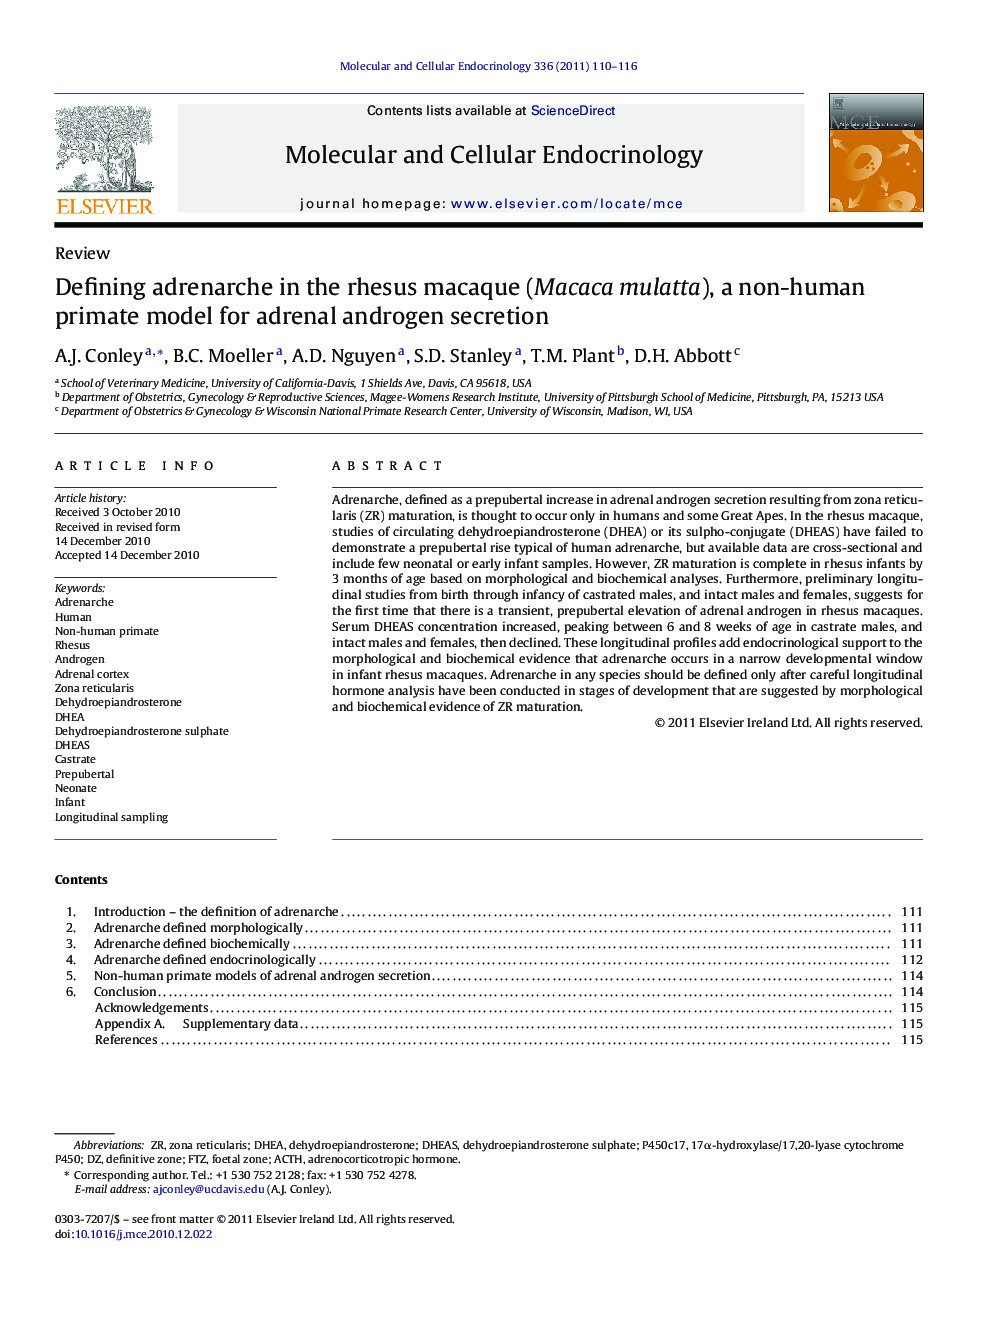 Defining adrenarche in the rhesus macaque (Macaca mulatta), a non-human primate model for adrenal androgen secretion